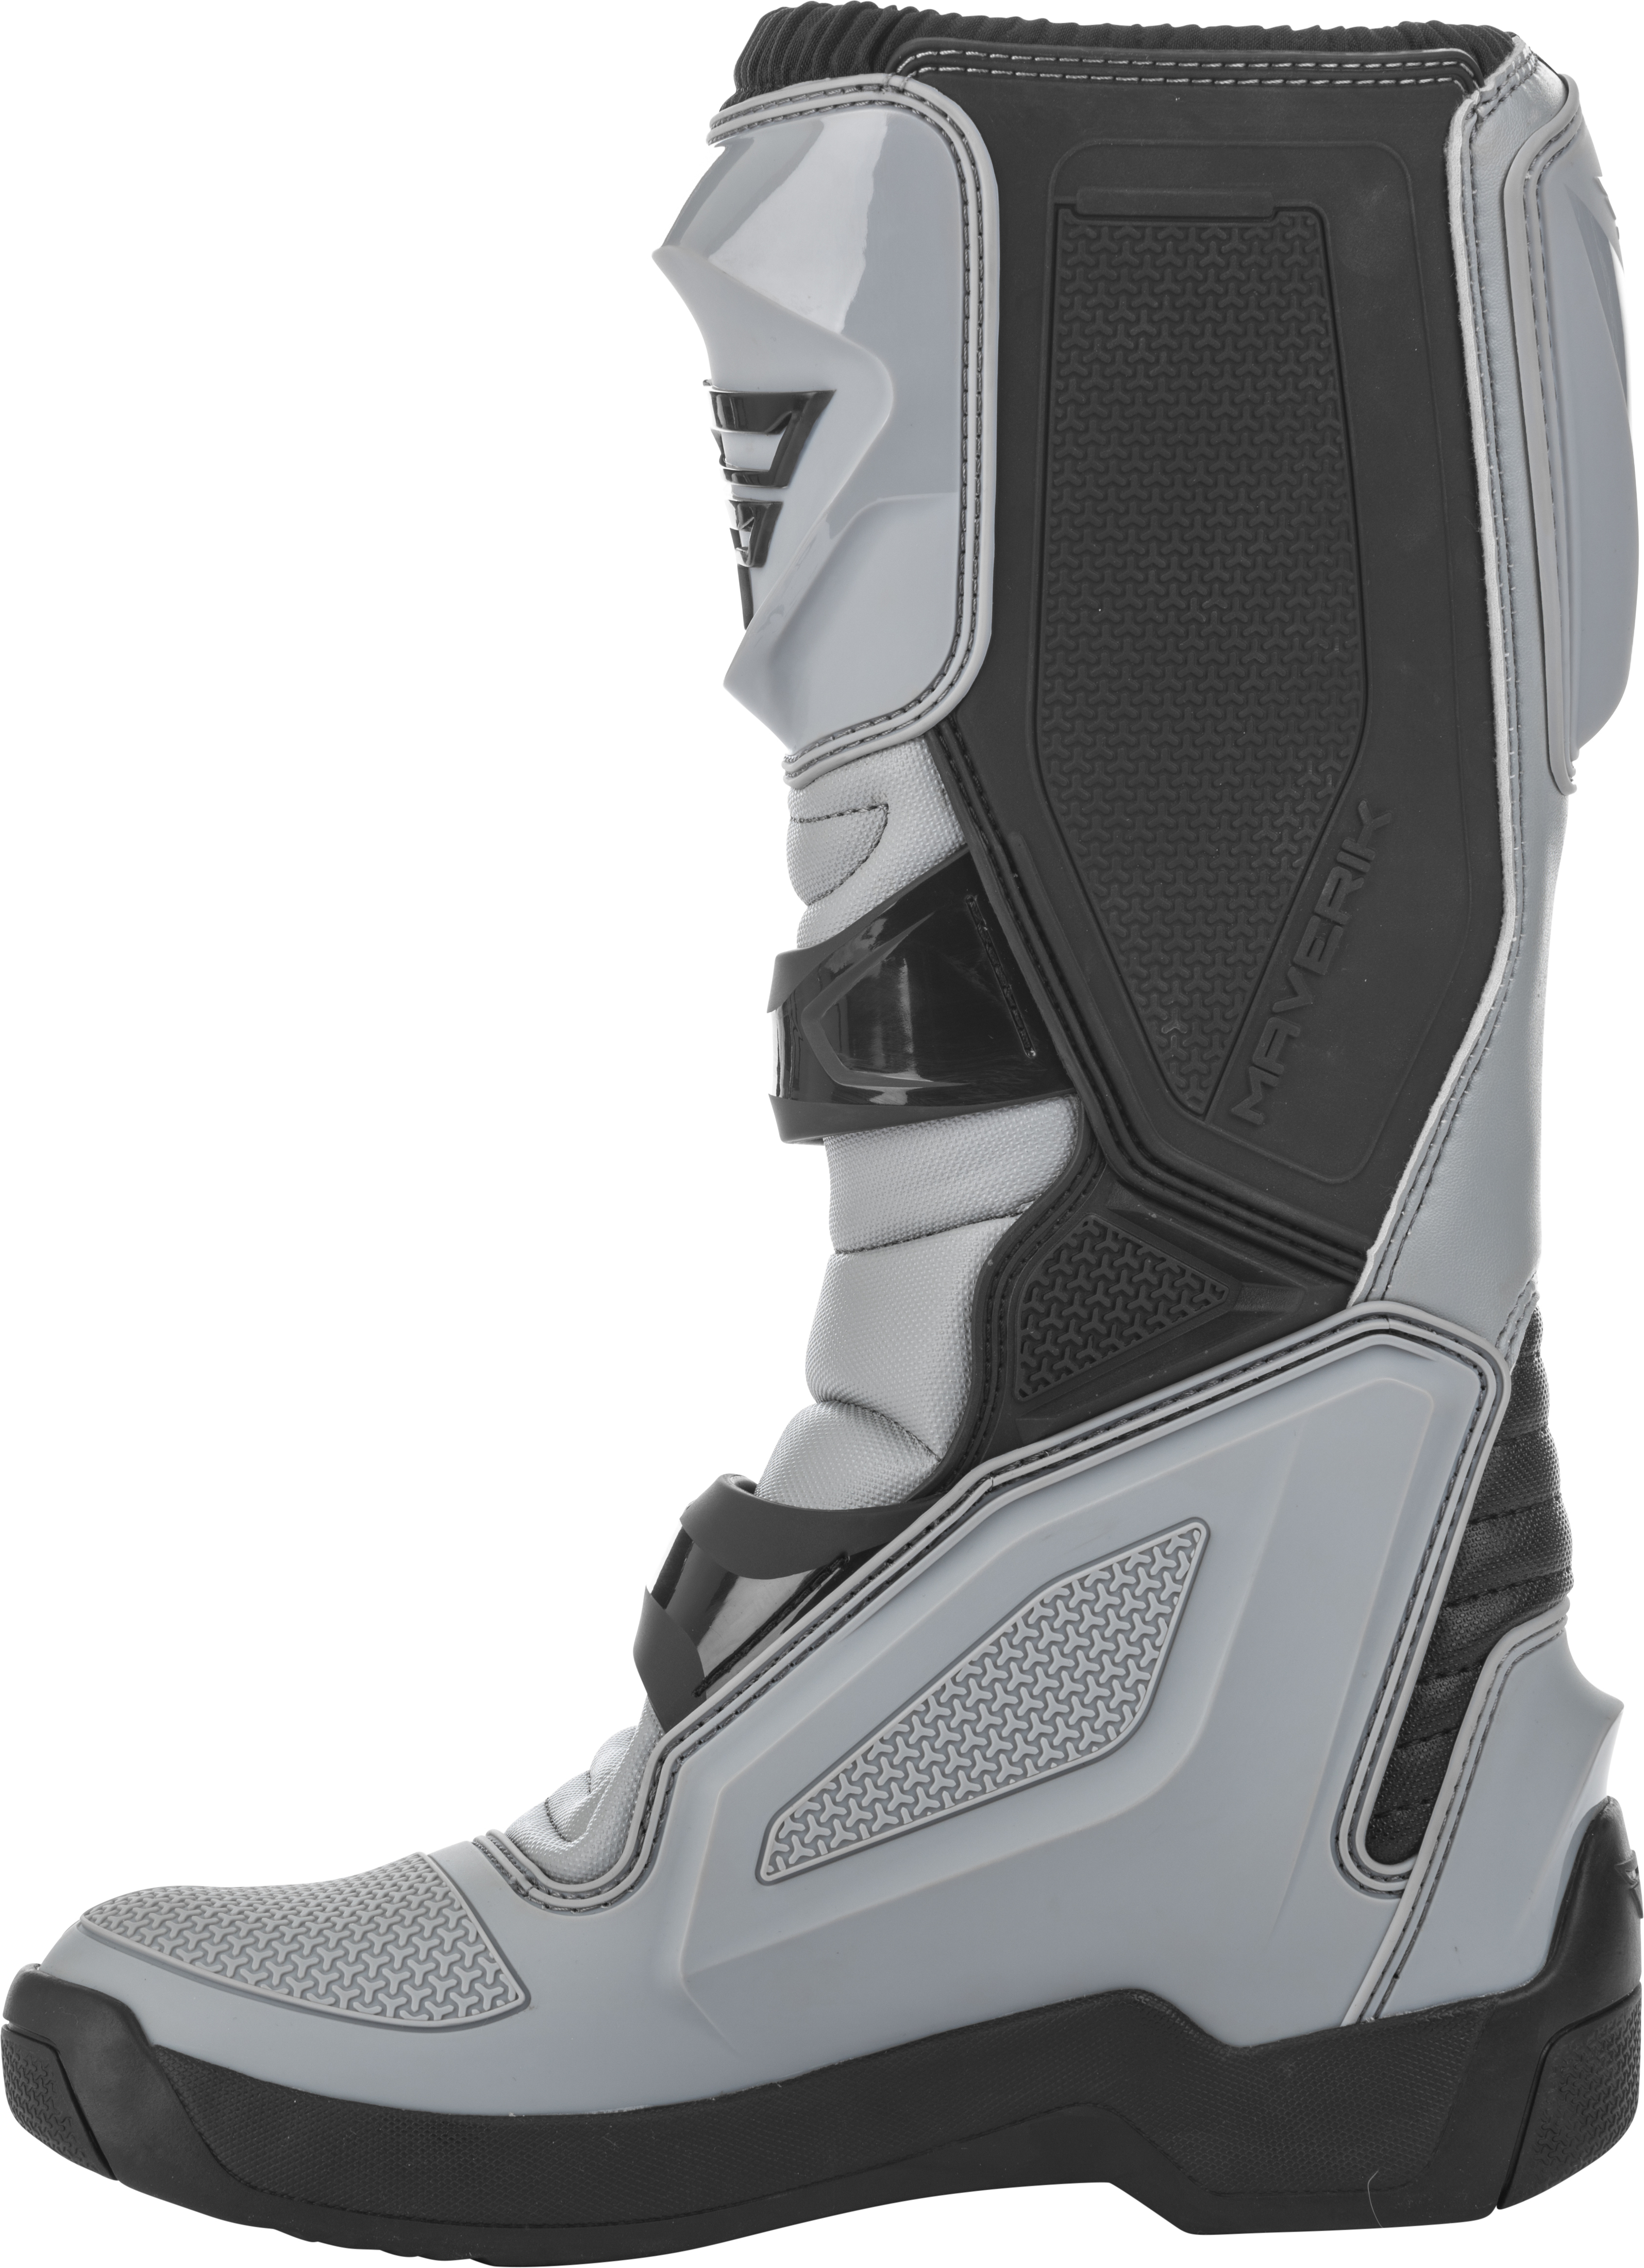 Maverik Boots Grey/Black Size 9 - Click Image to Close